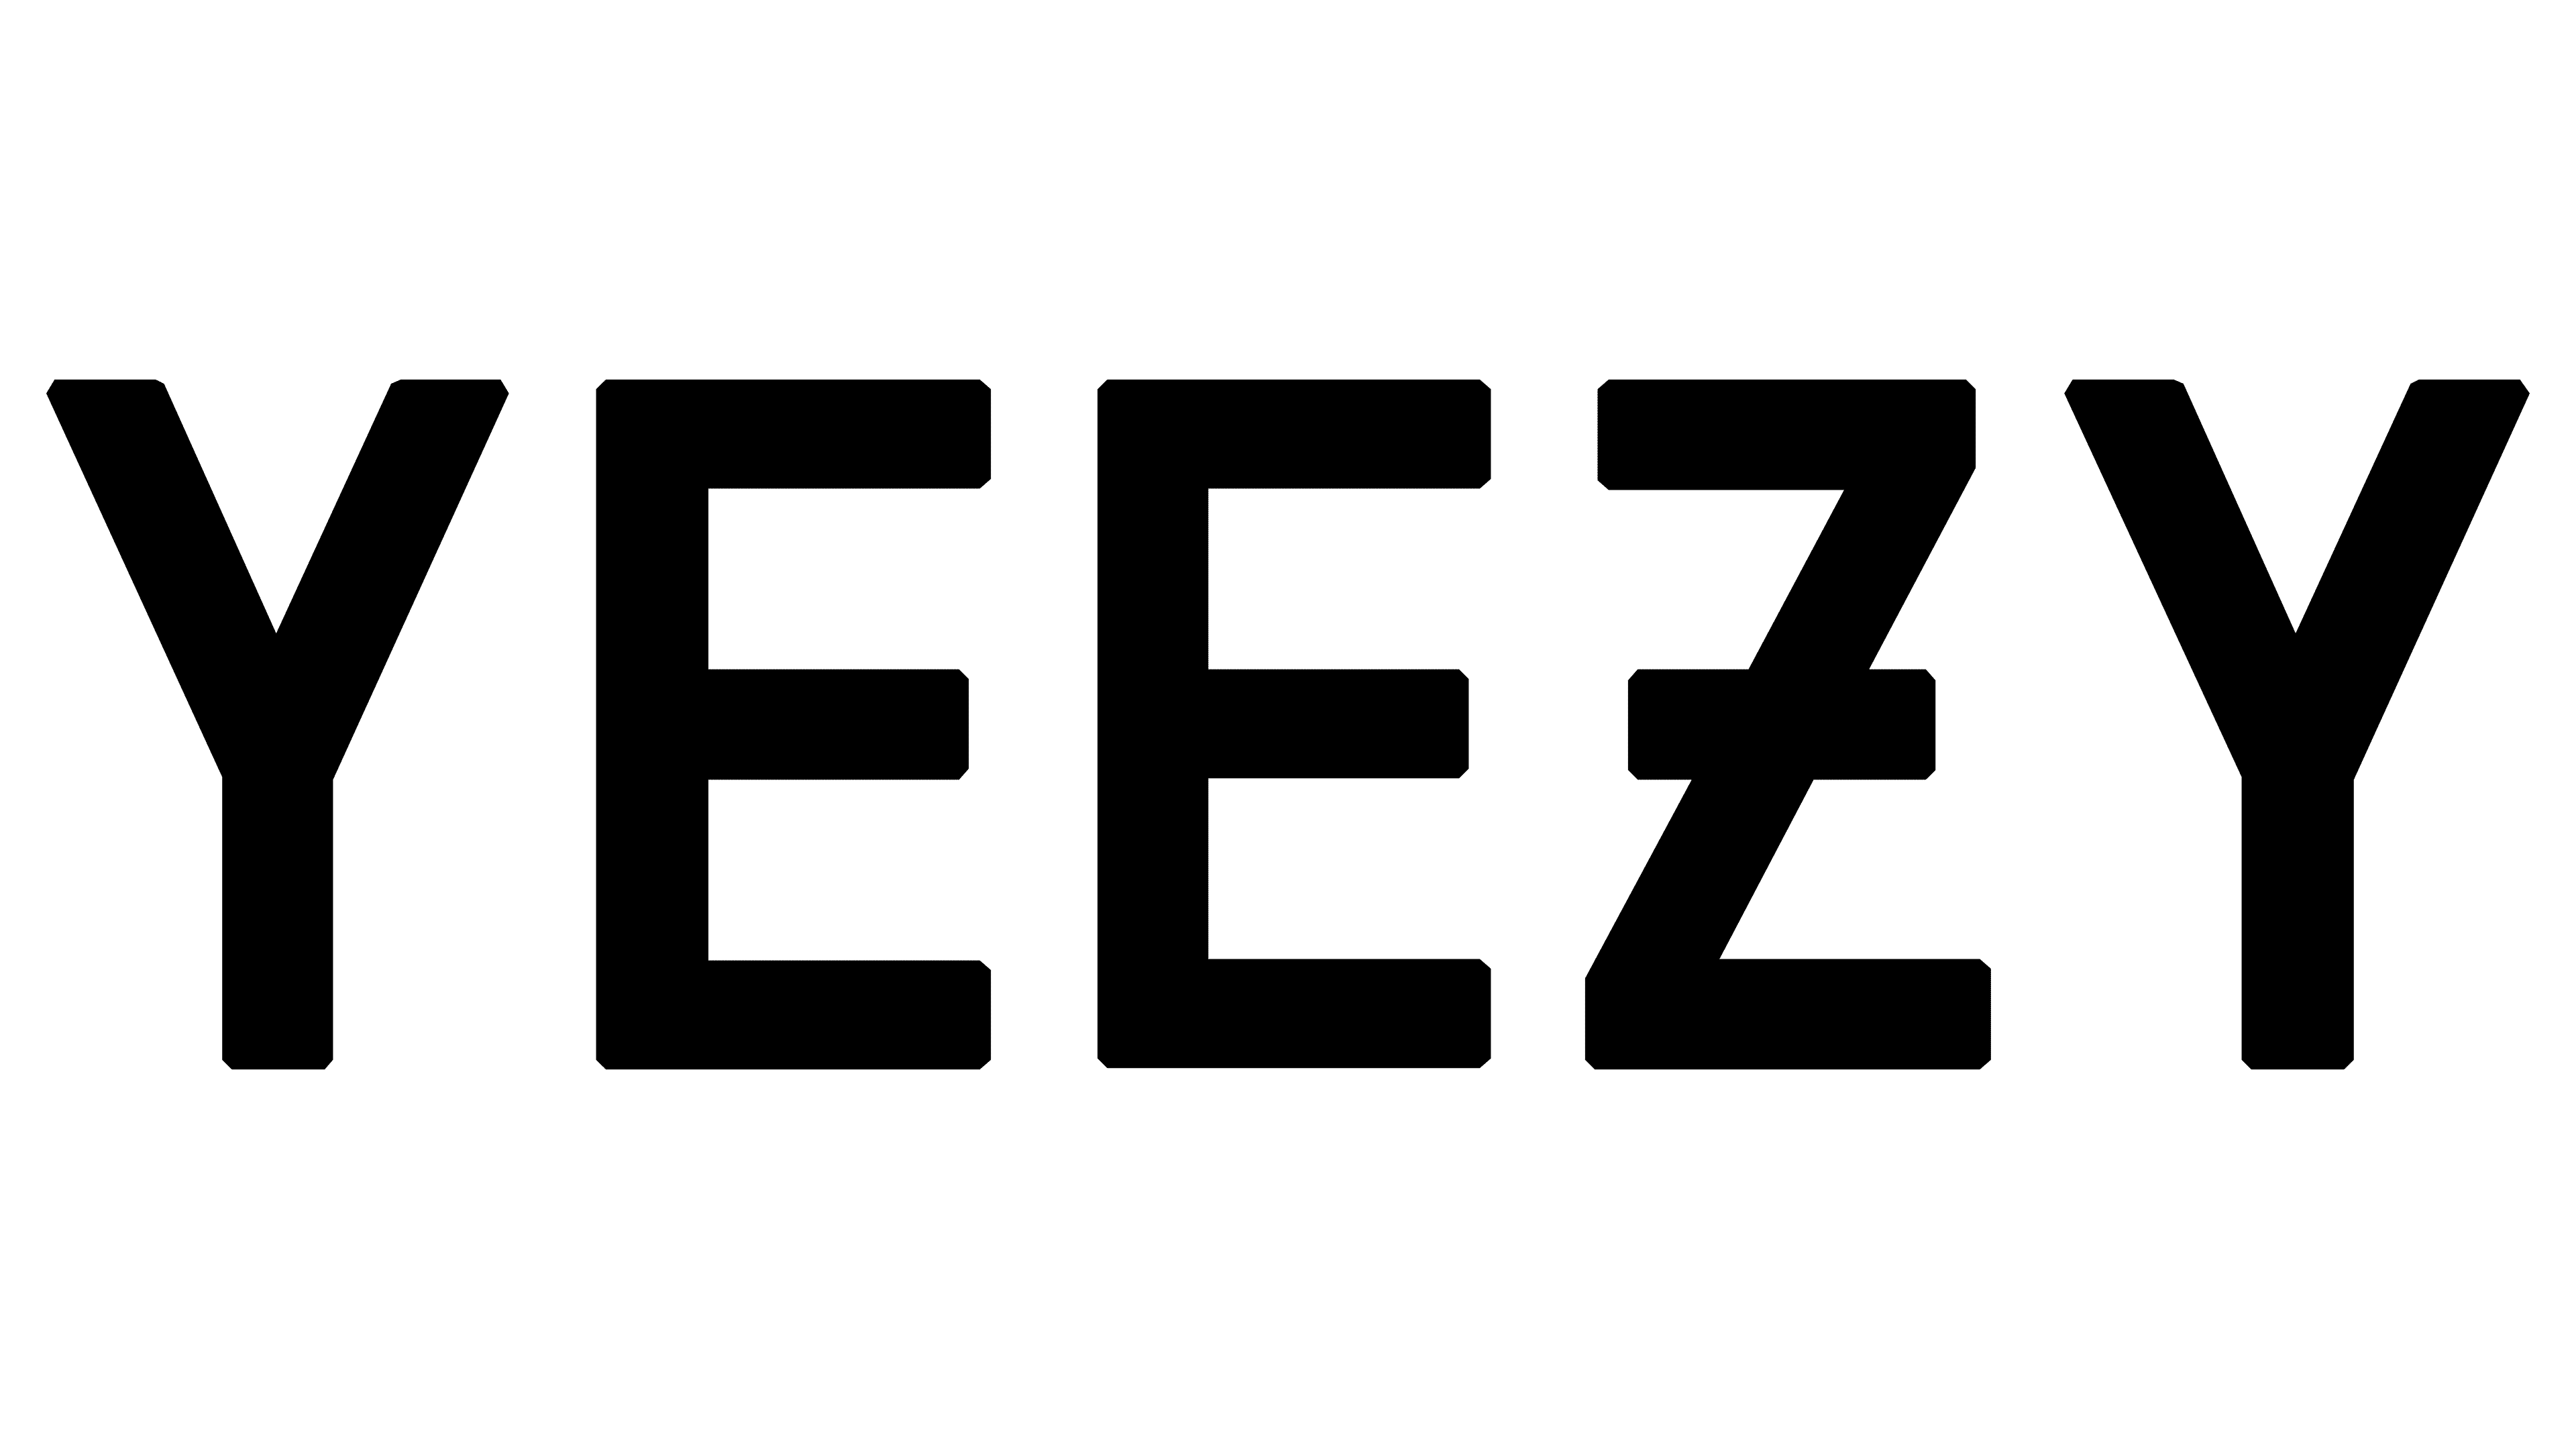 Yeezy-Logo